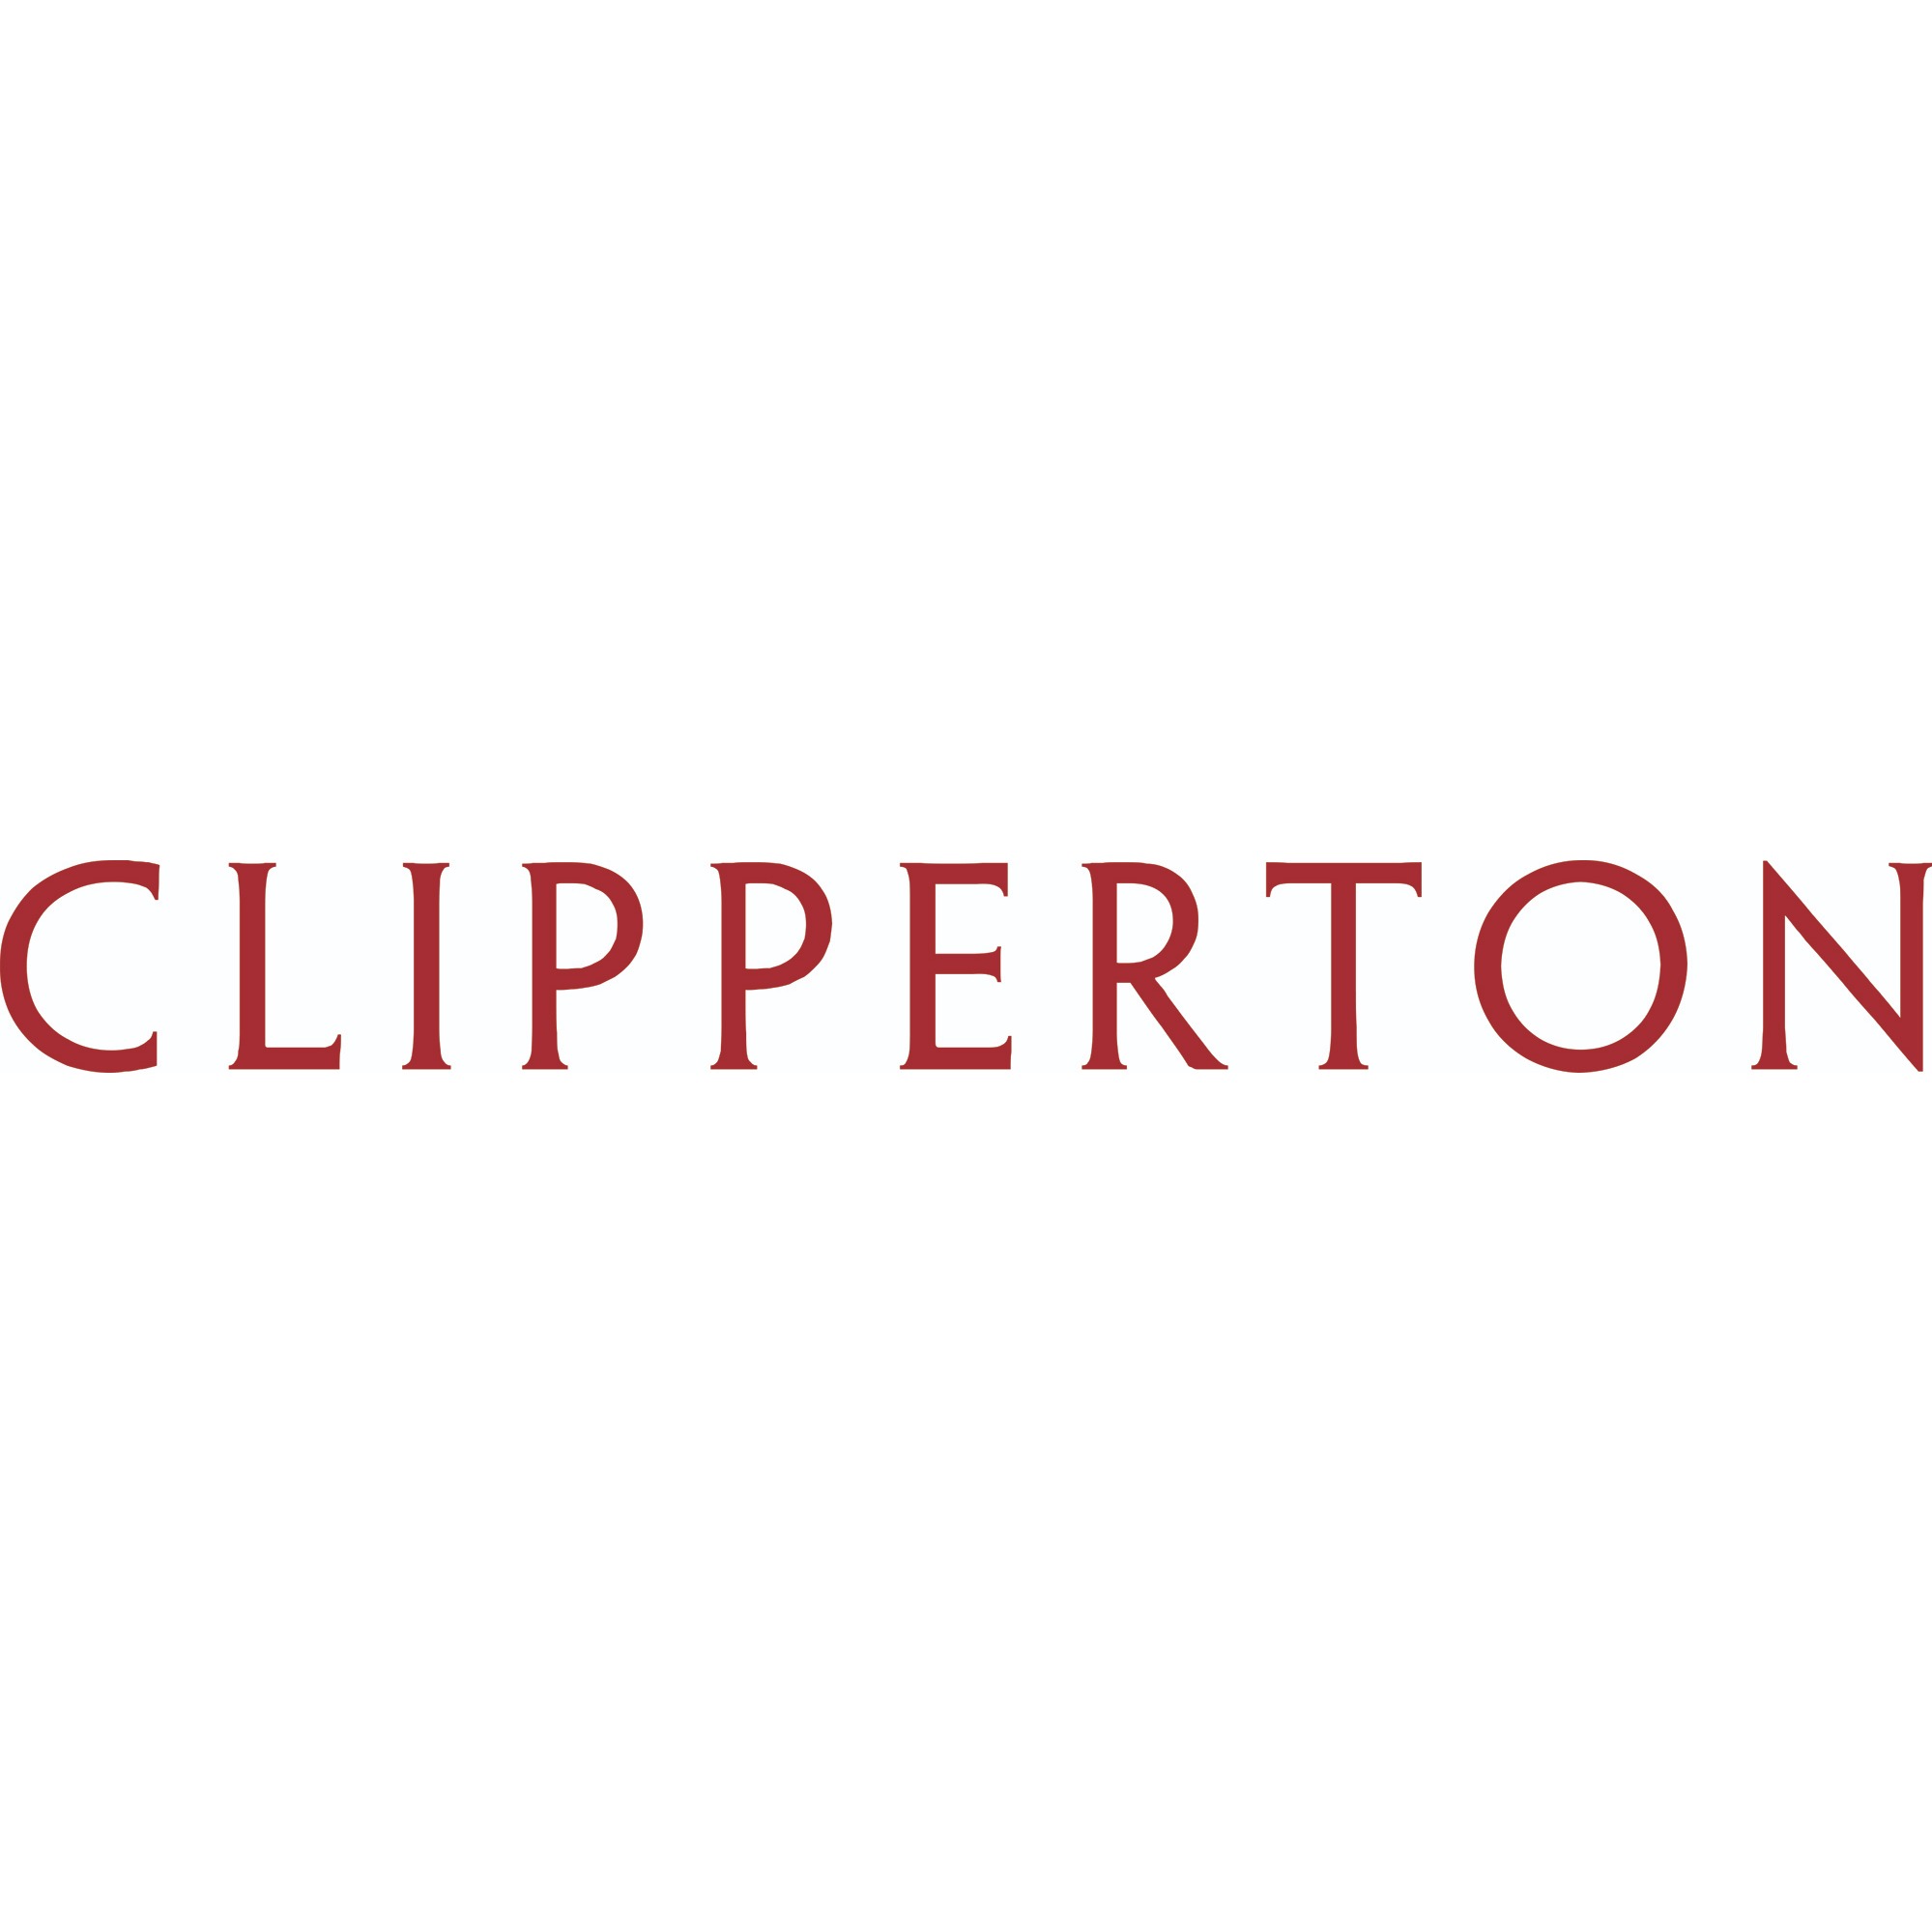 the Clipperton Finance logo.